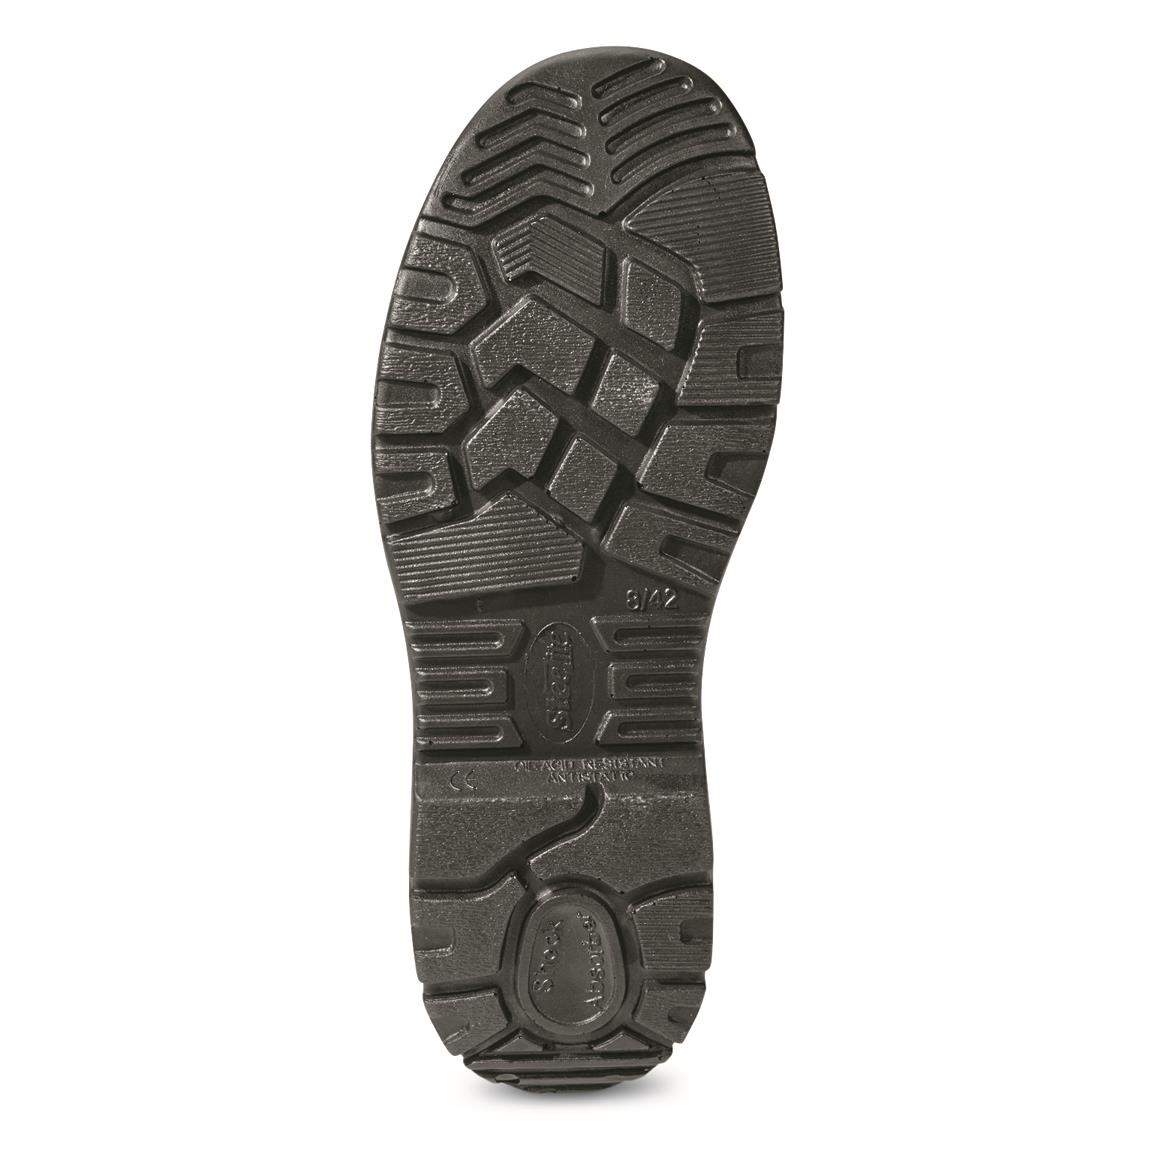 Reebok Soyay RB191 Steel Toe Work Shoes for Women - 580339, Running ...